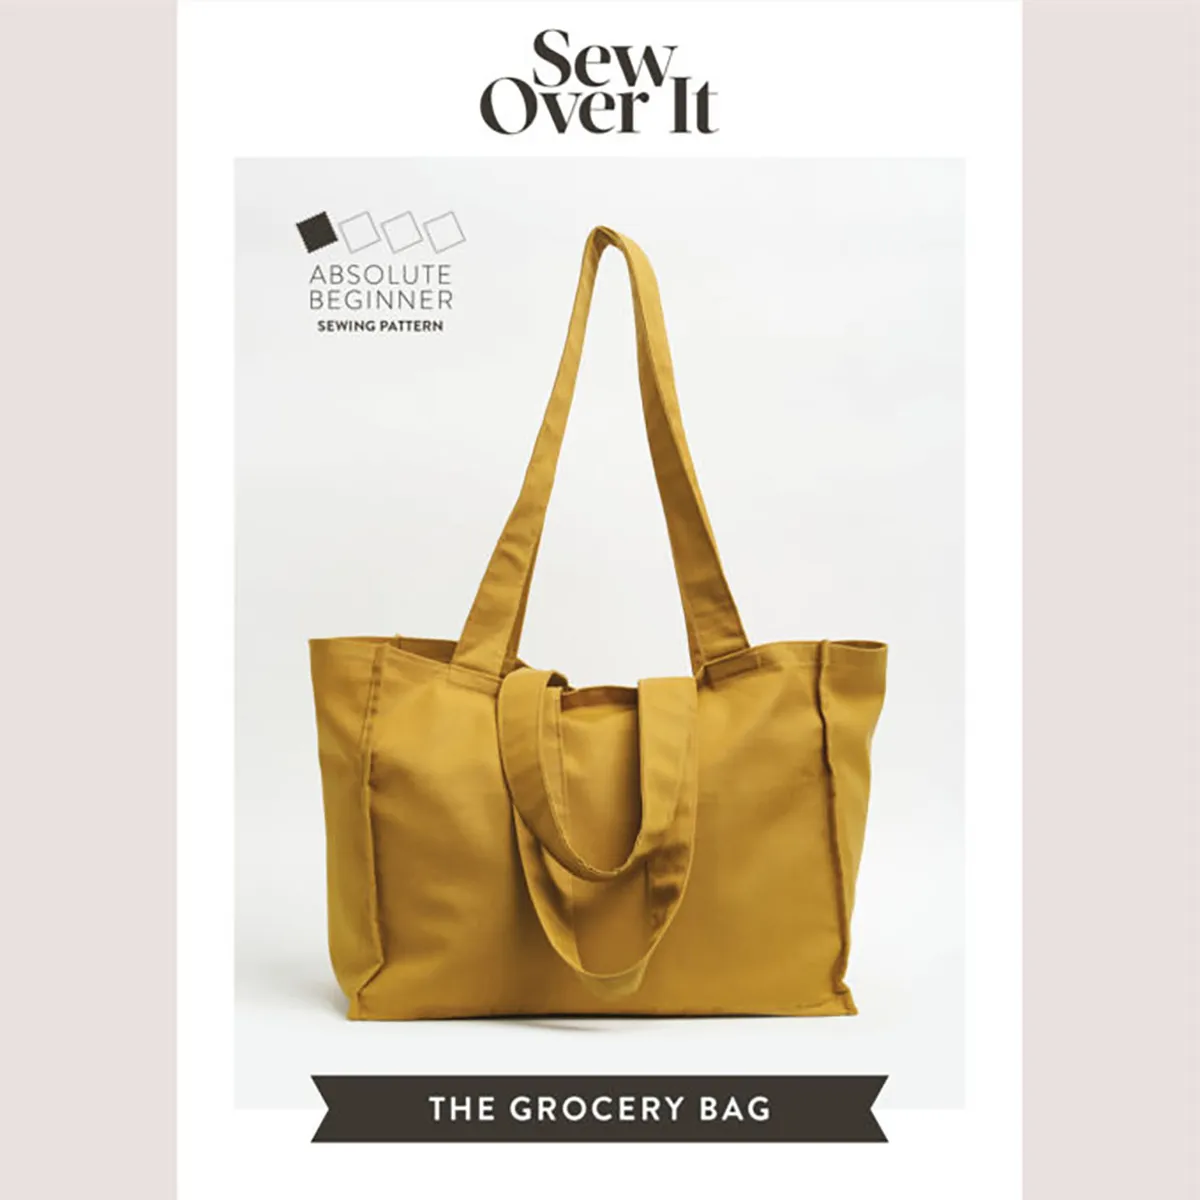 Bag patterns – Sewoverit the grocery bag